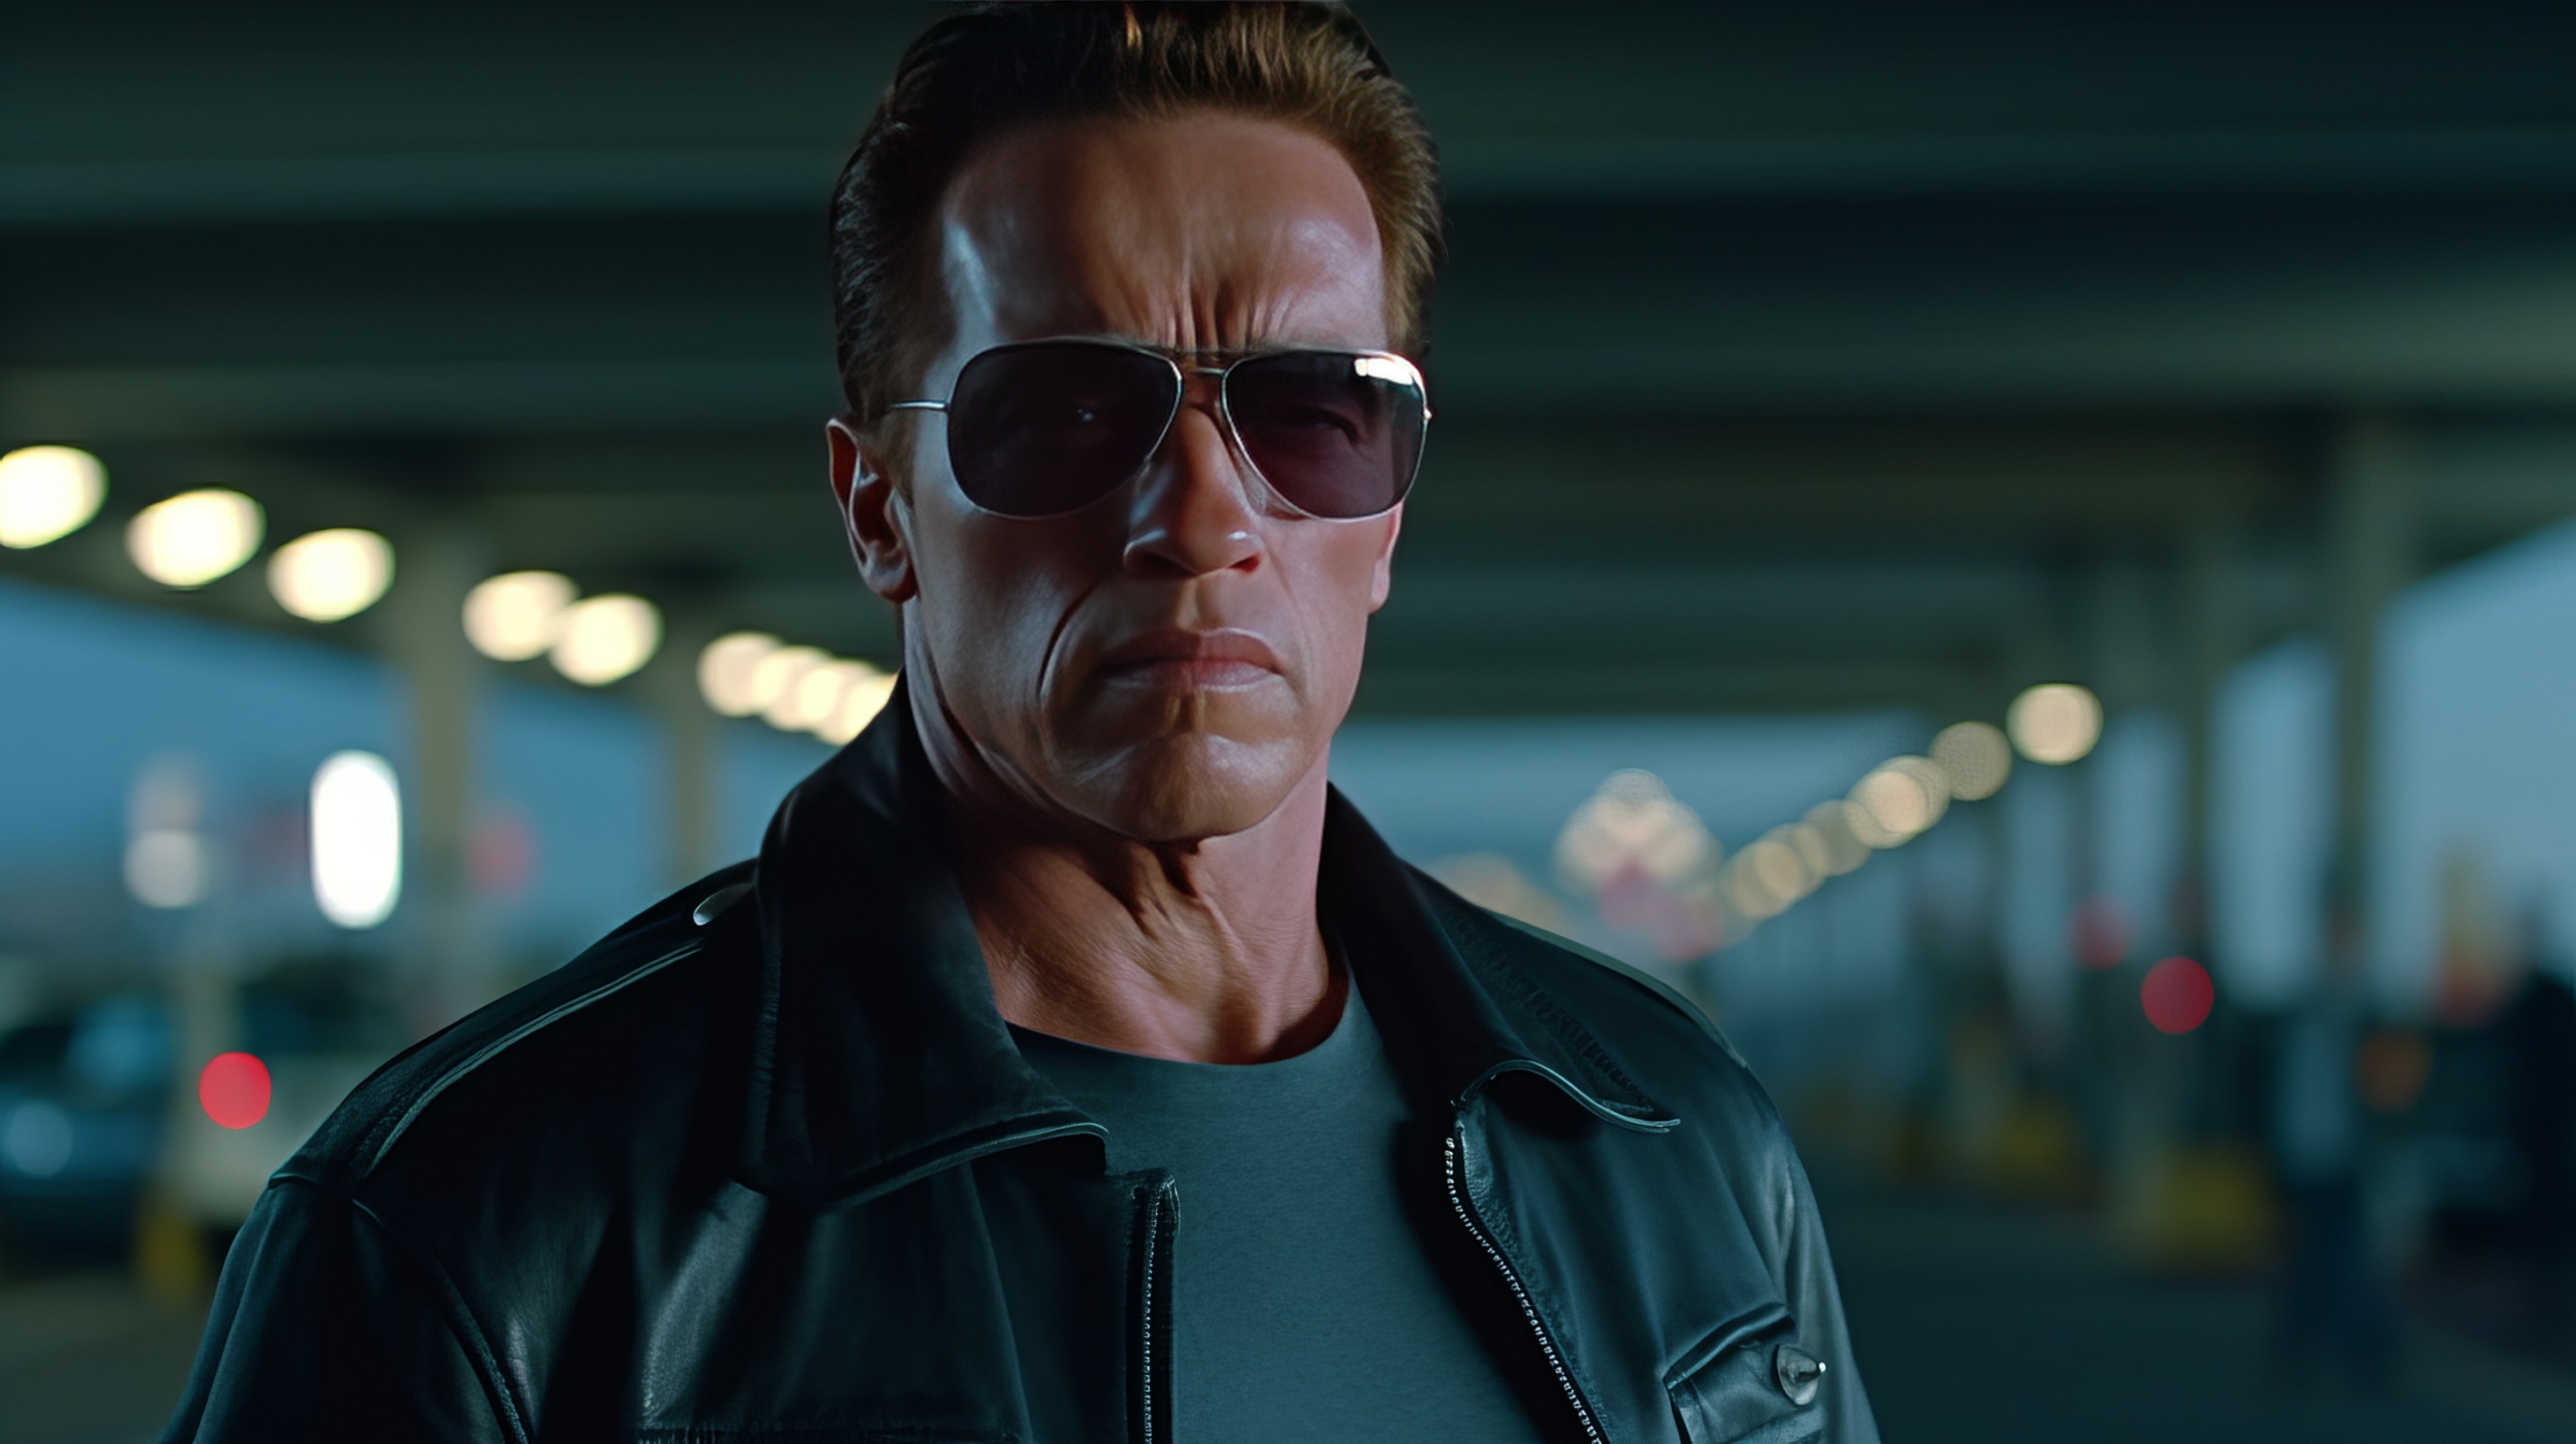 General 2912x1632 AI art Arnold Schwarzenegger Terminator men sunglasses jacket looking at viewer blurred blurry background